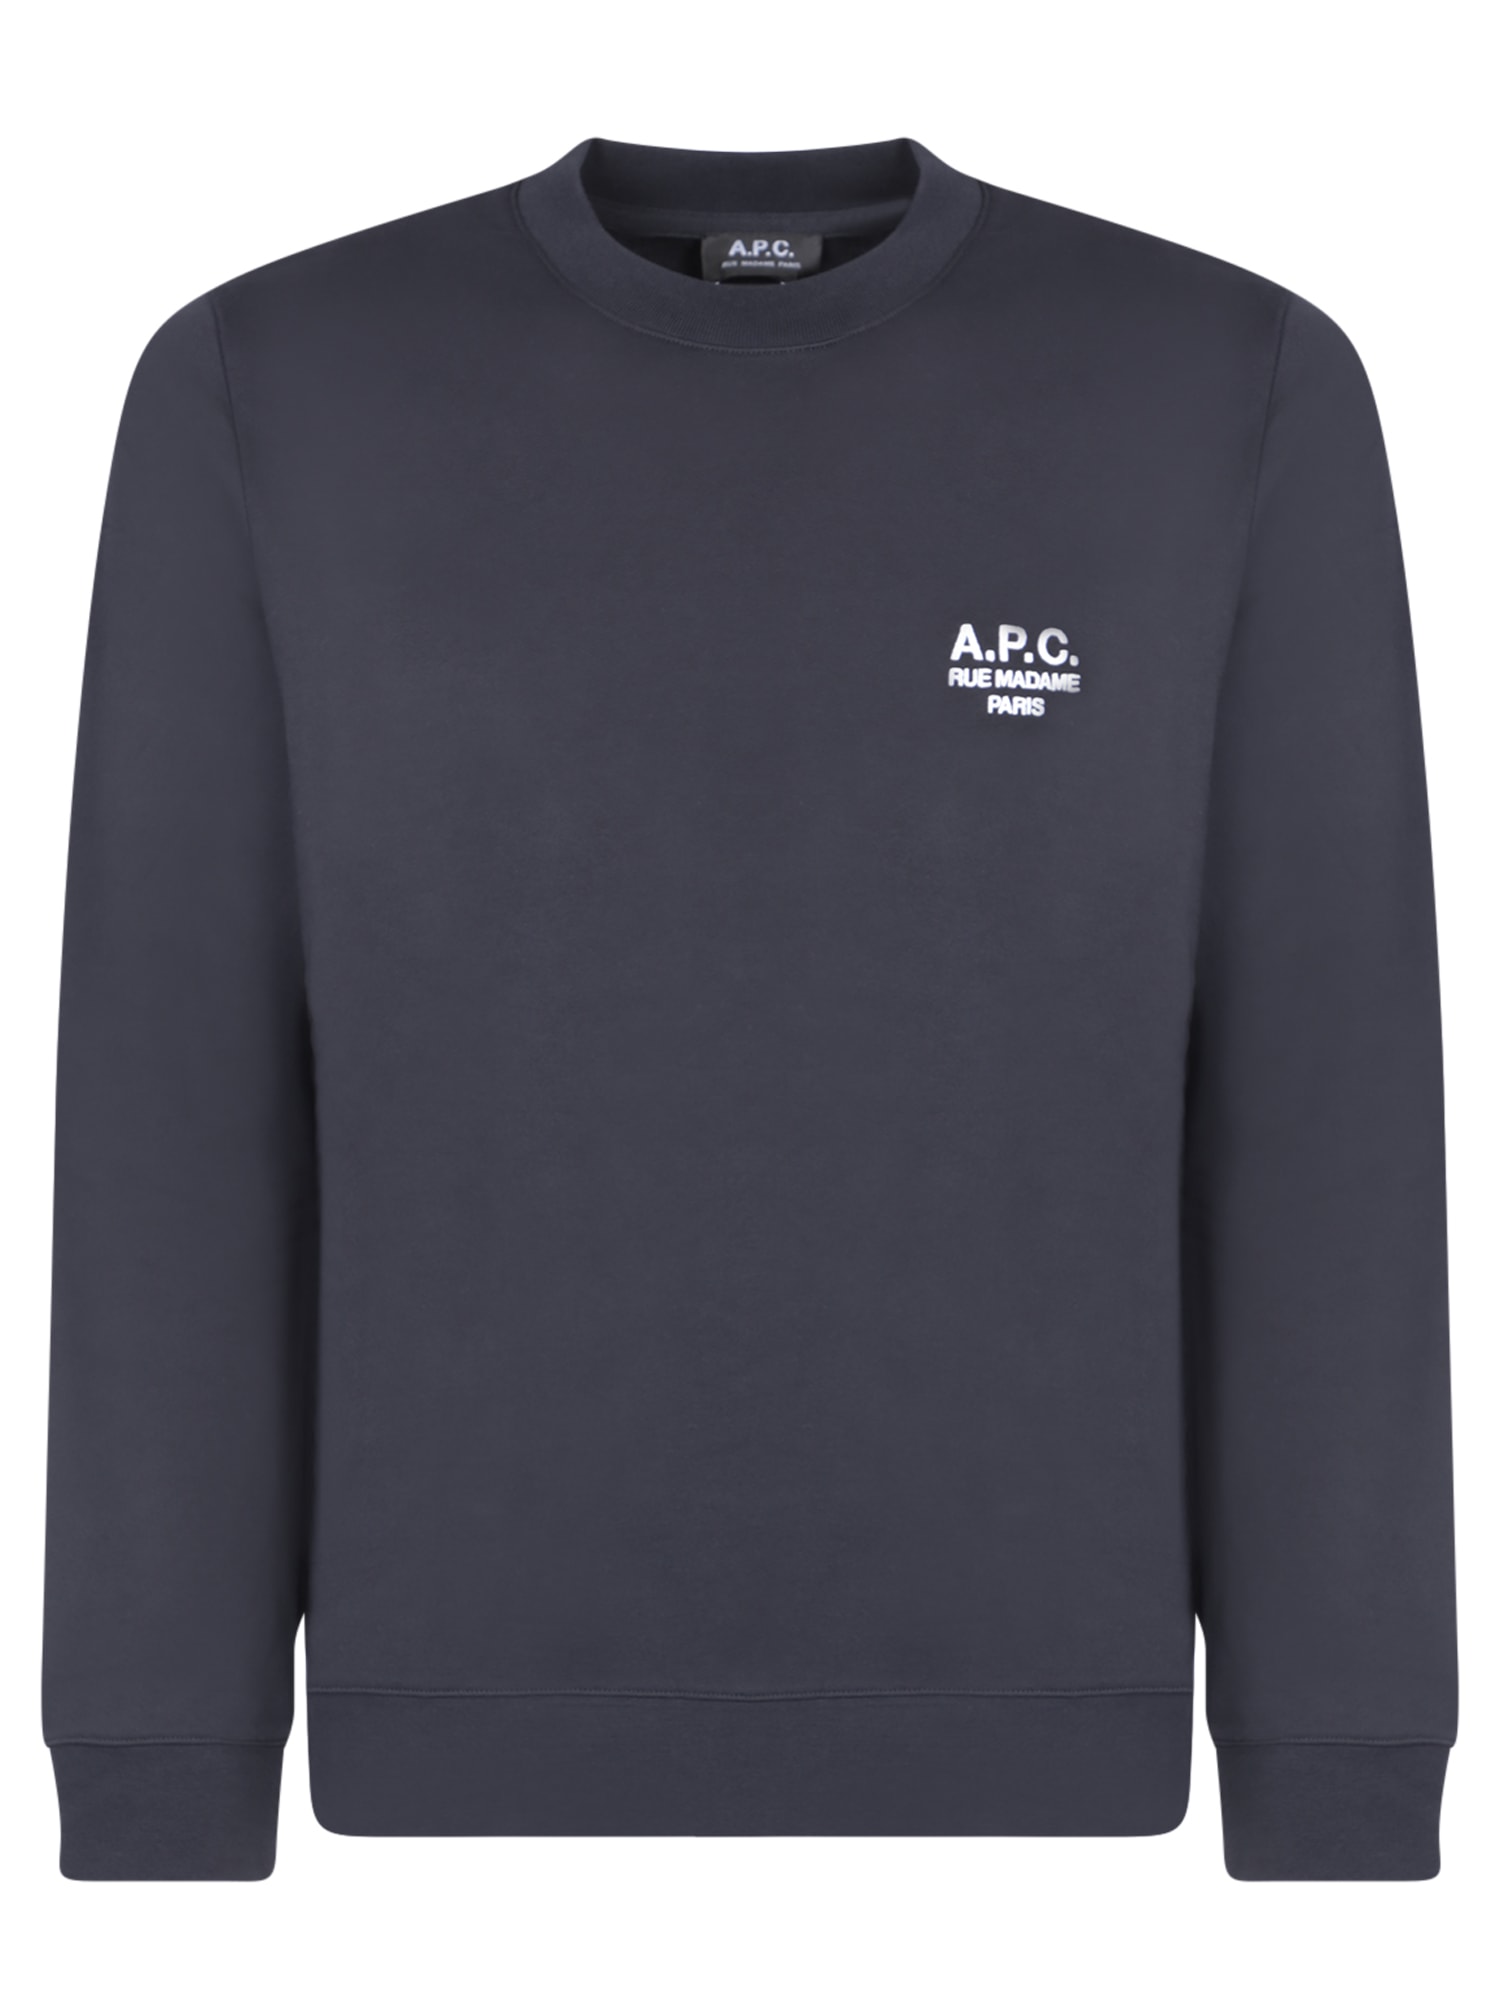 Apc Rider Black Sweatshirt